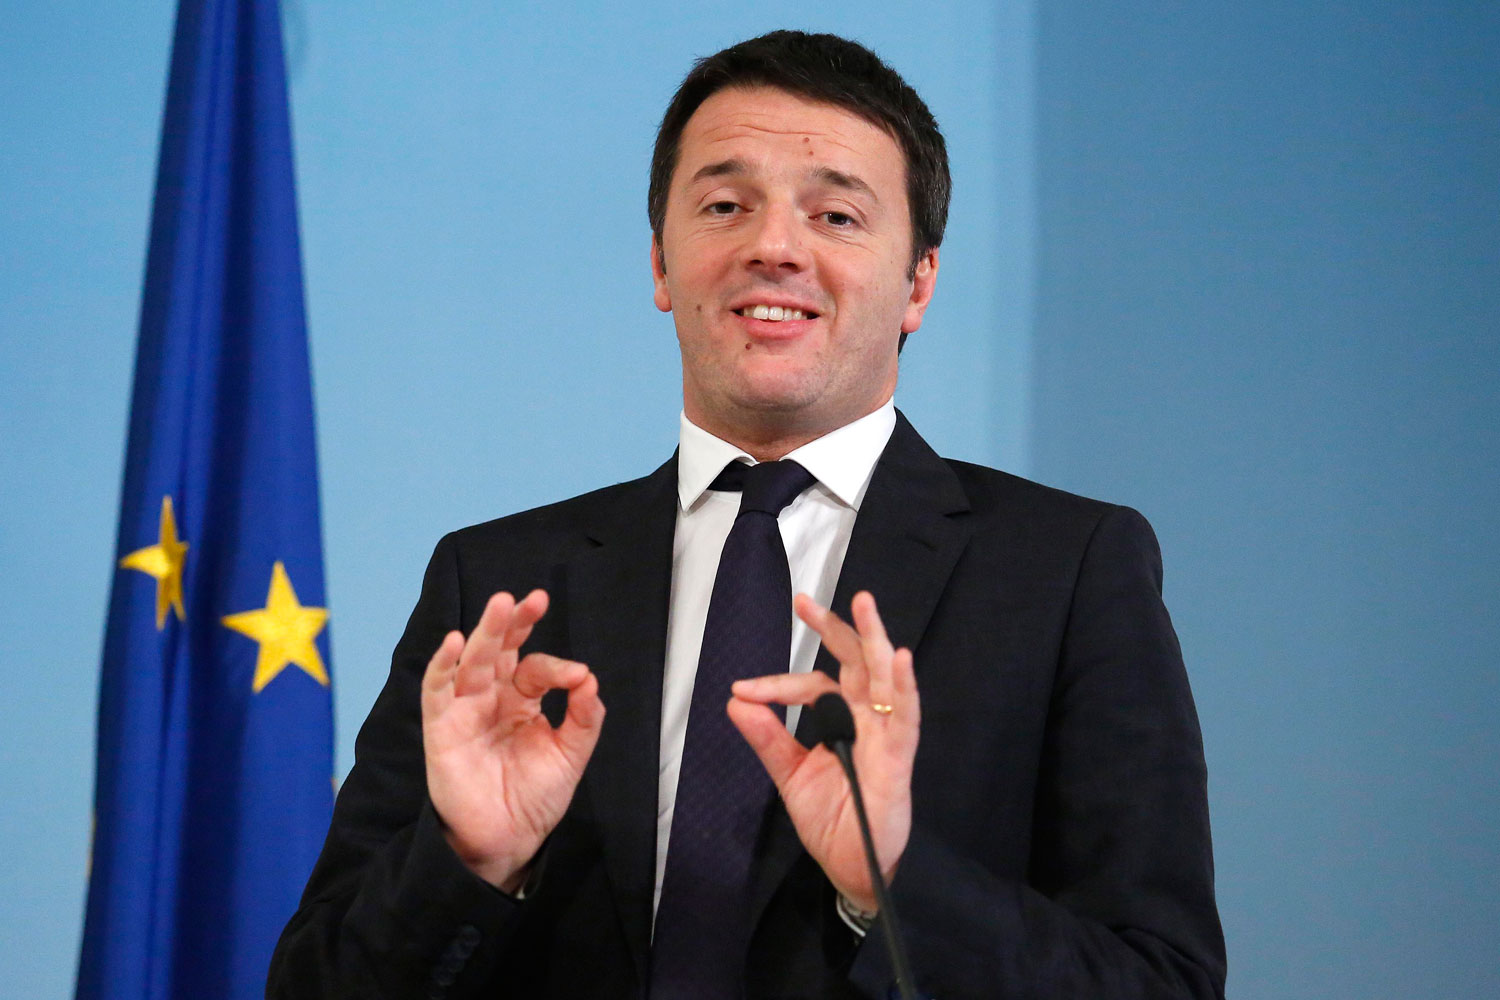 Aprobada la nueva ley electoral del primer ministro, Matteo Renzi